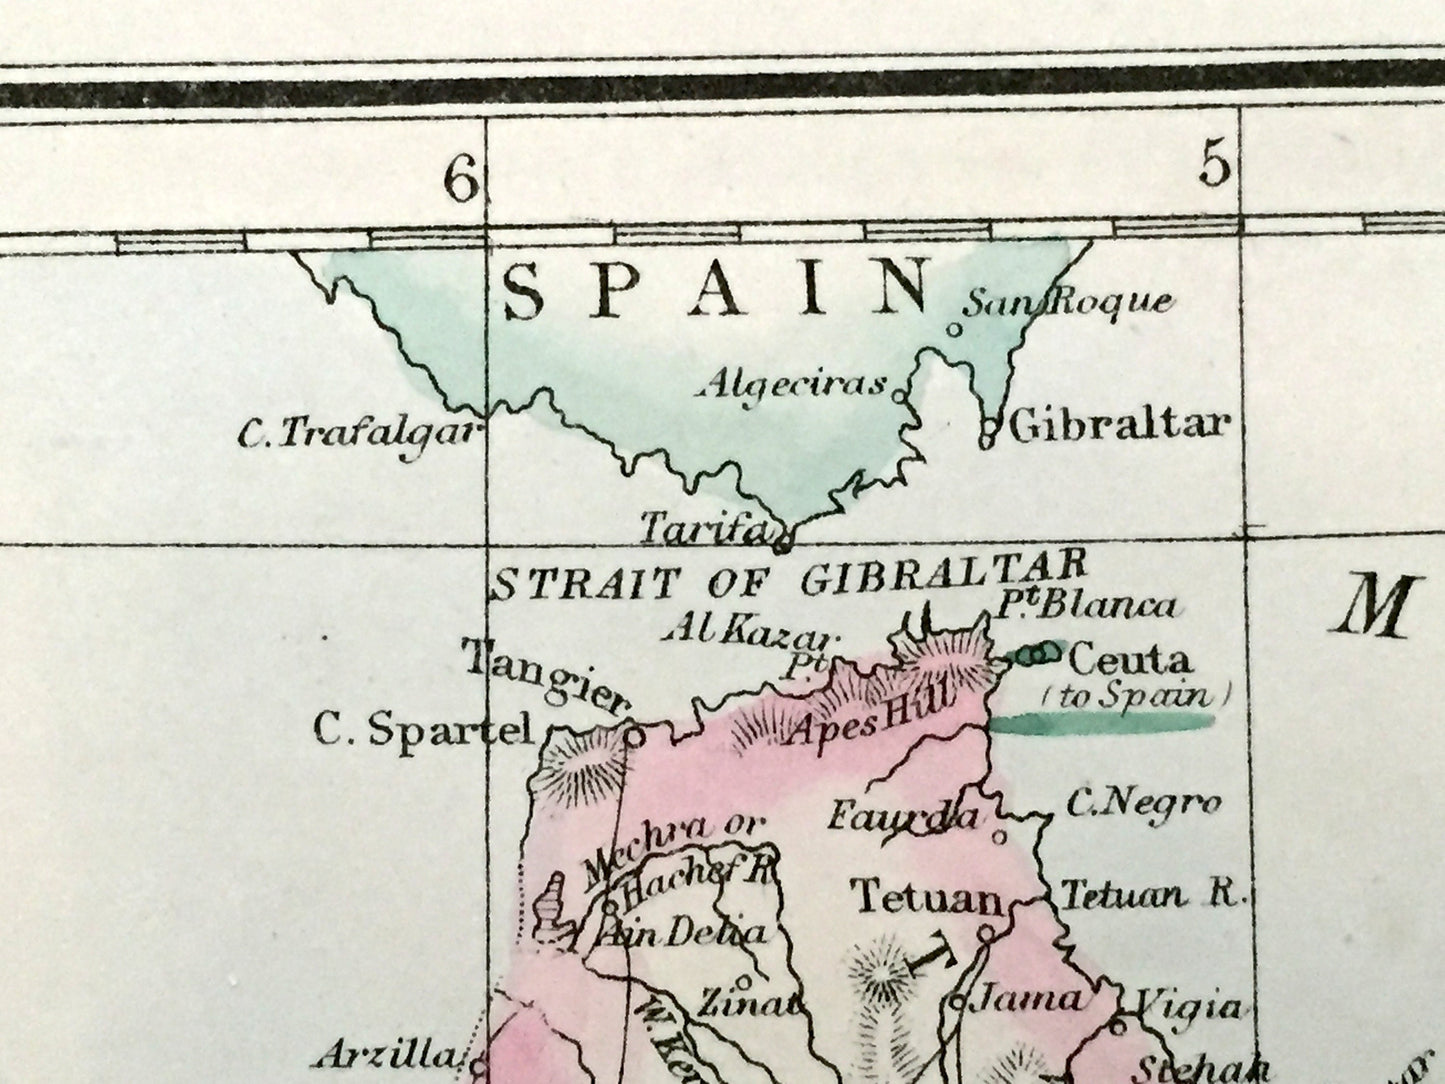 Antique 1863 Morocco Map by Weller & Weekly Dispatch – Strait of Gibraltar, Atlas Mountains, Algeria, Tangier, Rabat, Marrakesh, Fez, Oran